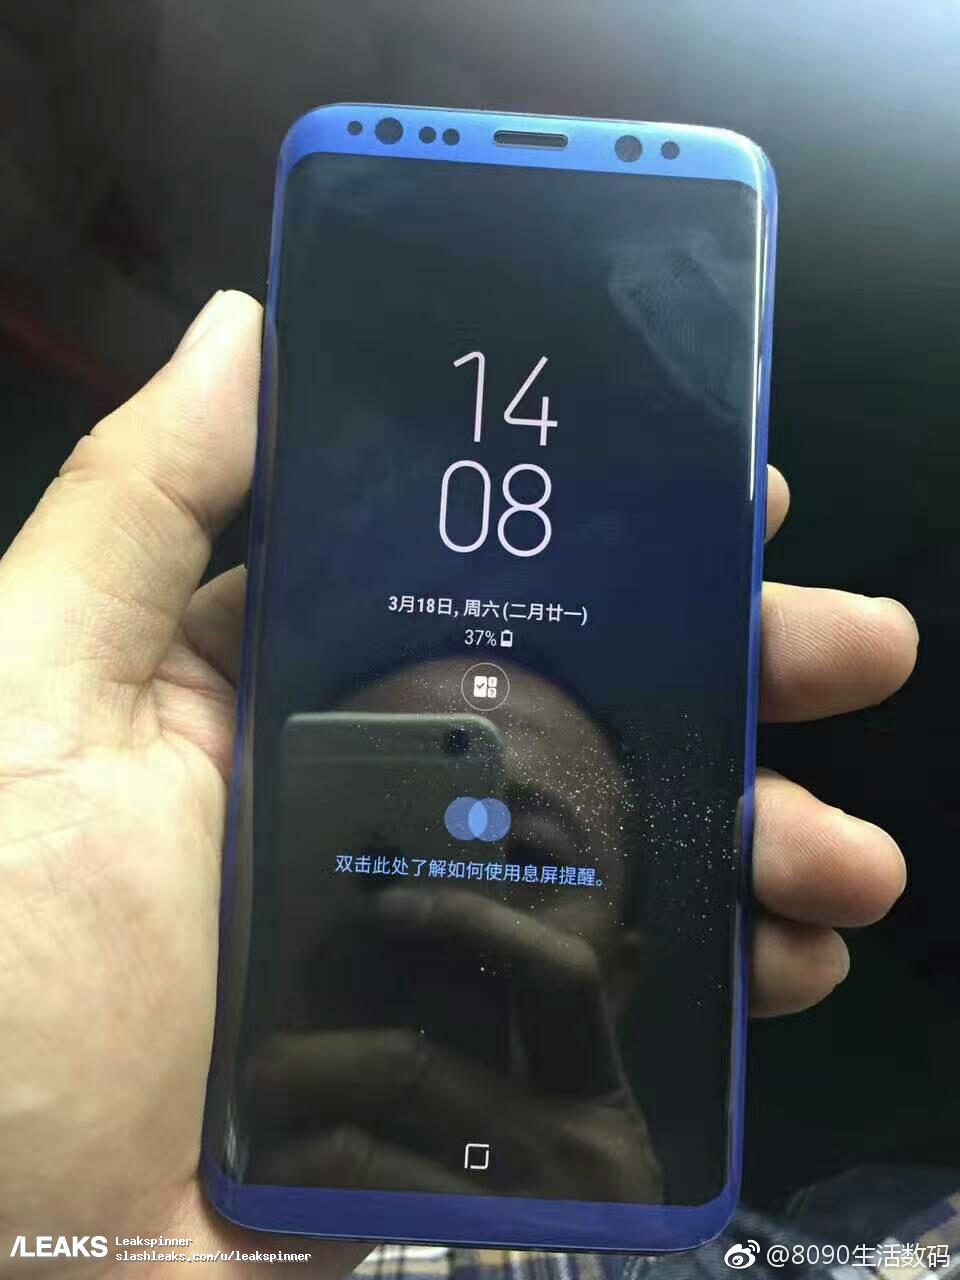 Samsung Galaxy s8 Blue